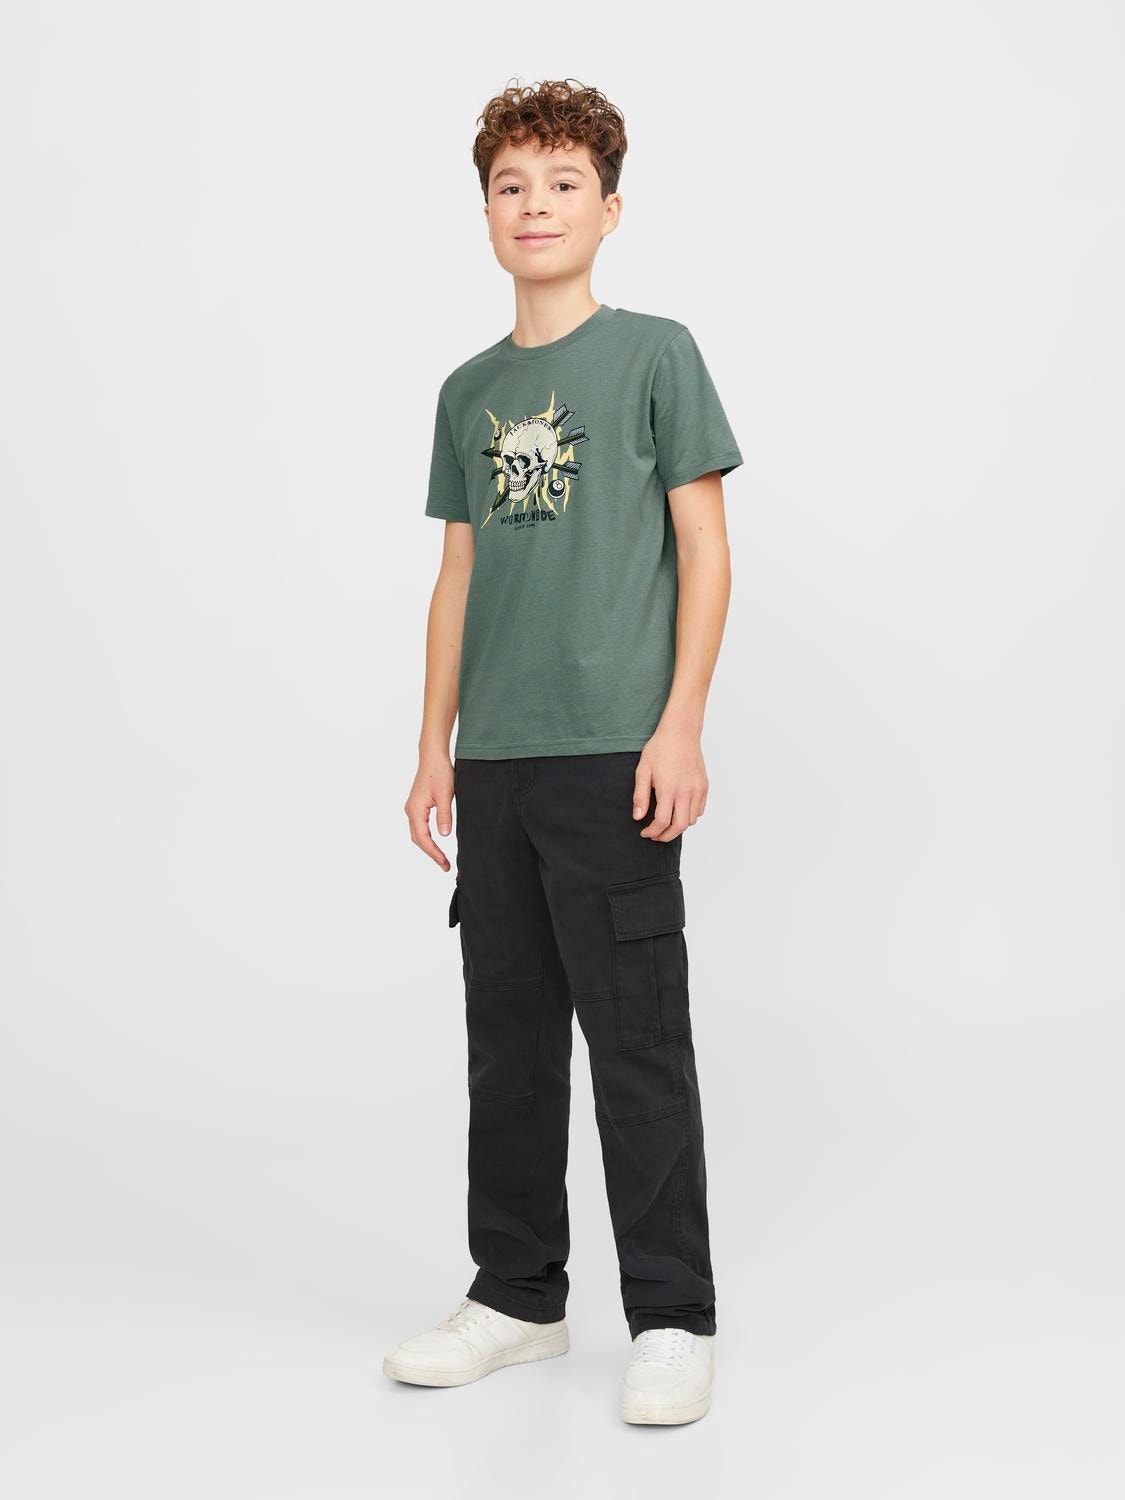 Jack & Jones T-shirt Estampar Para meninos -Laurel Wreath - 12253965